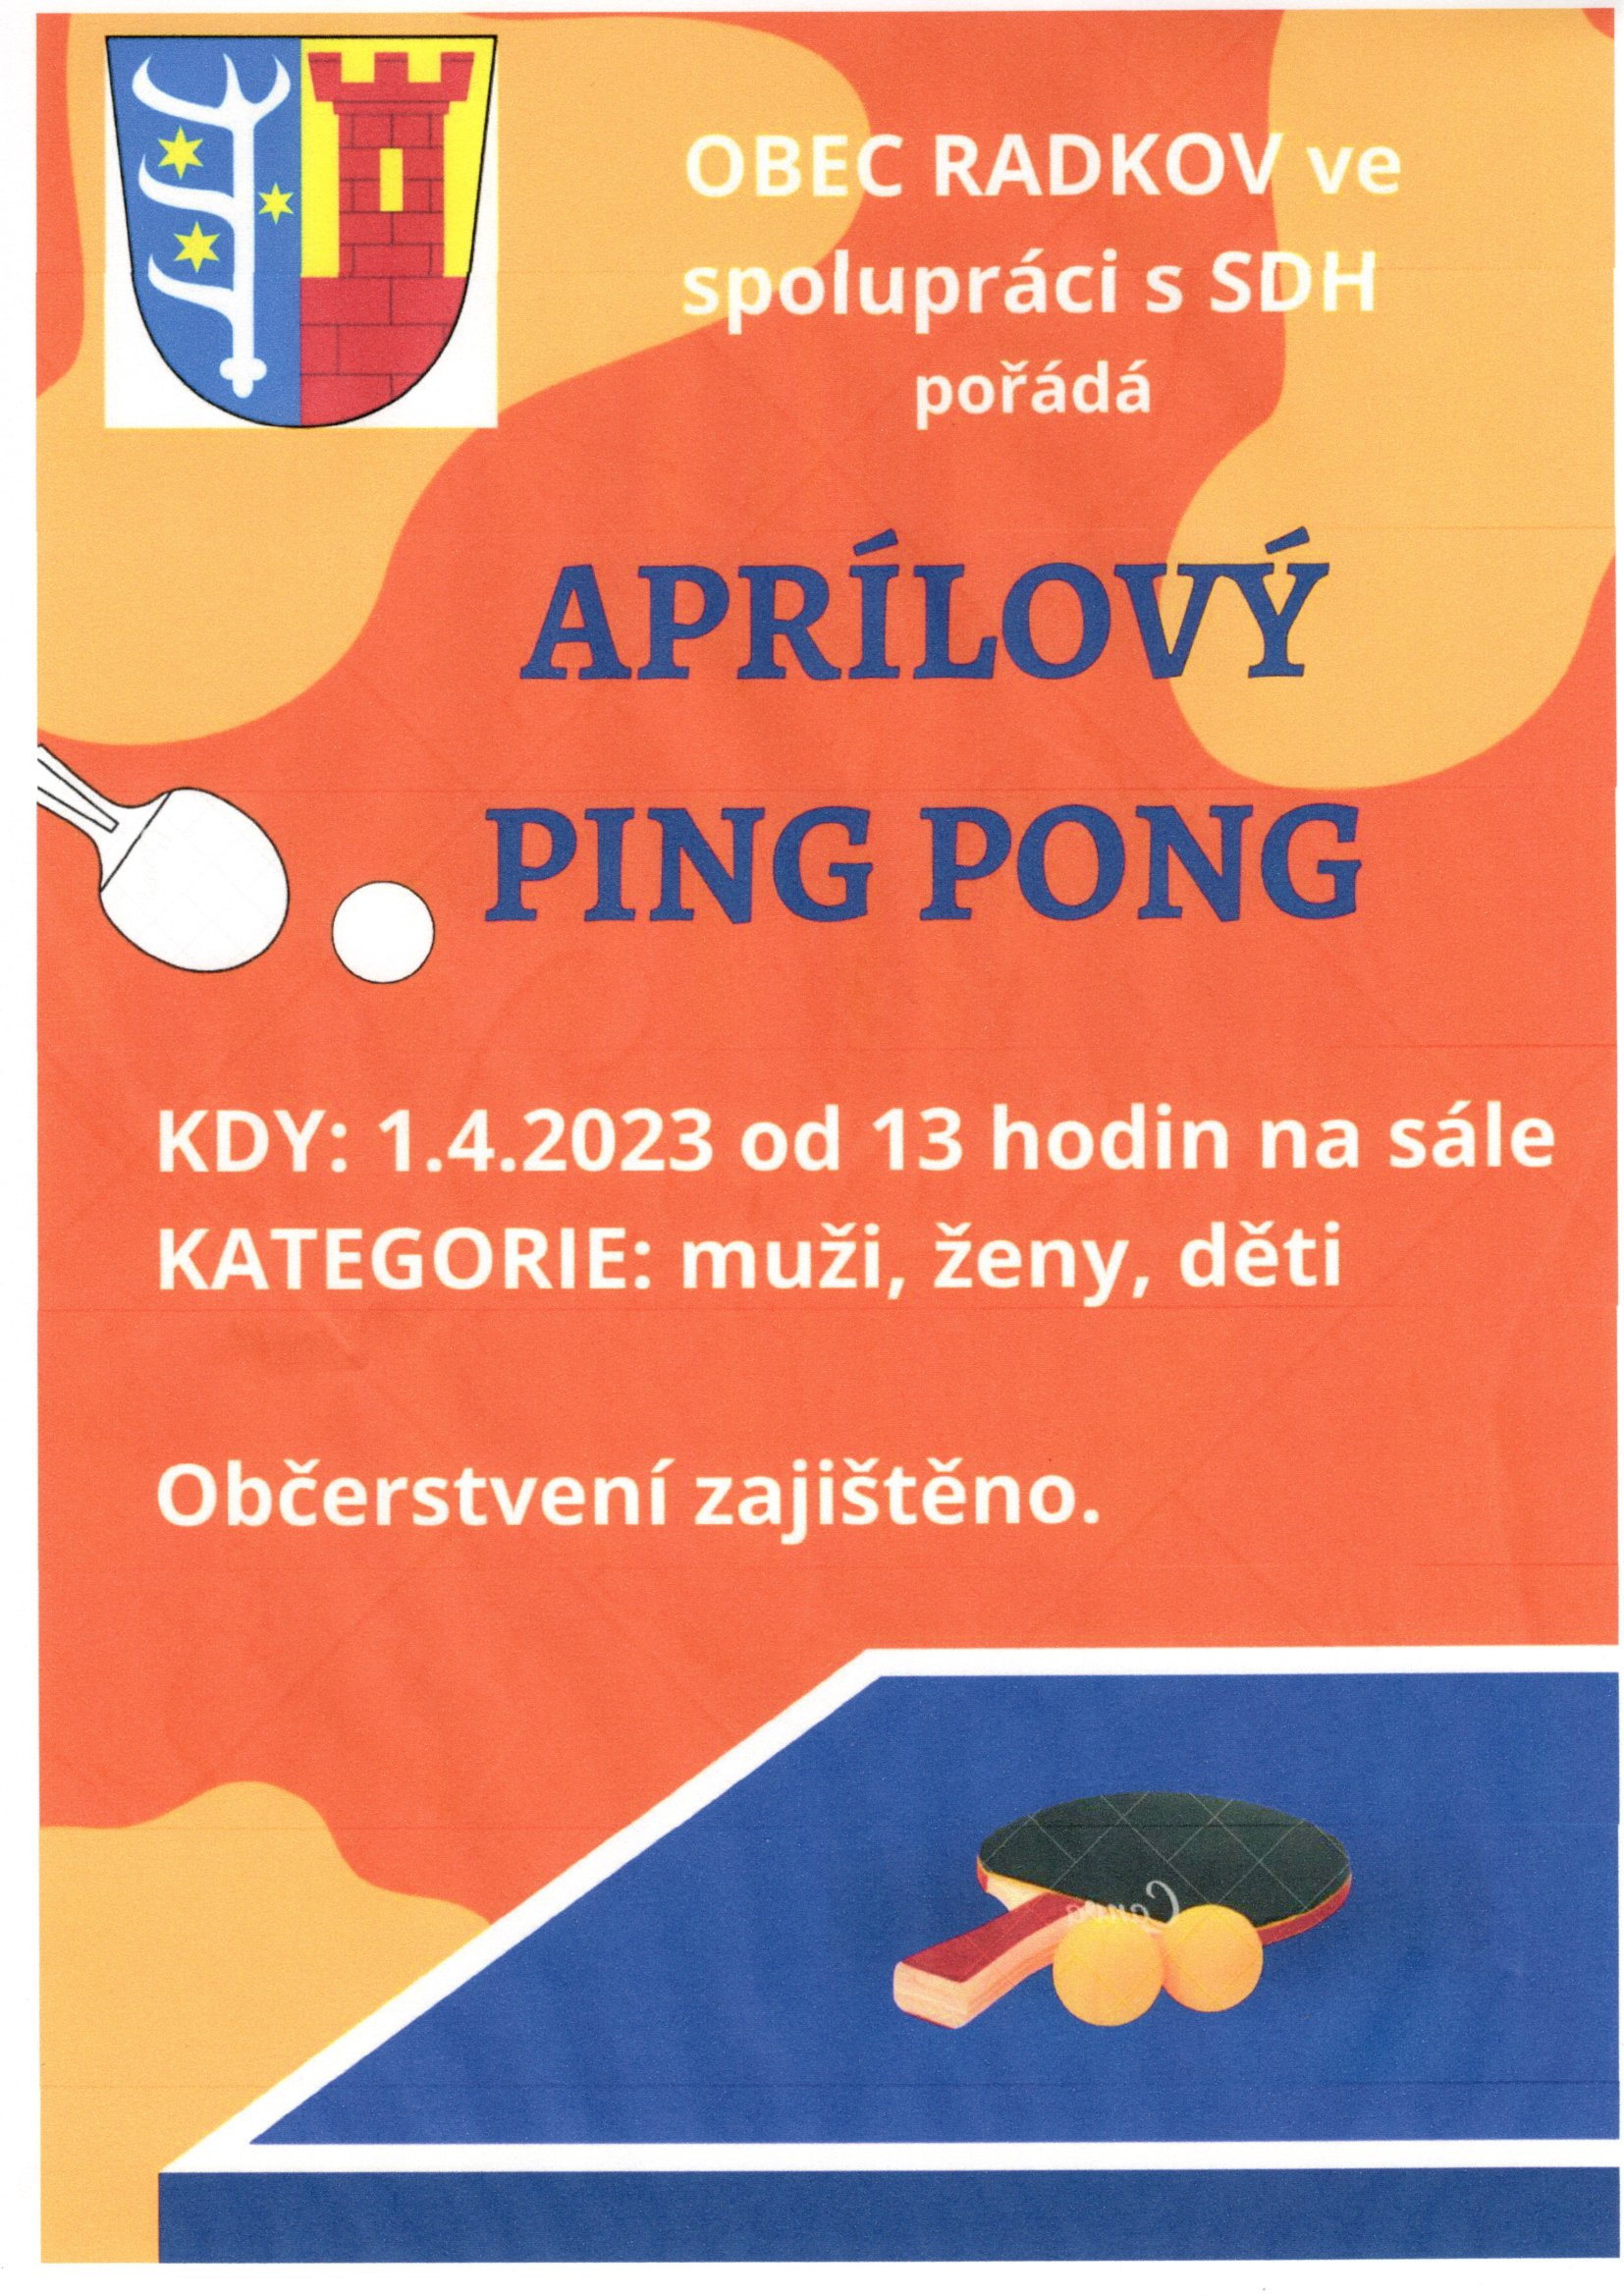 Aprilovy-turnaj